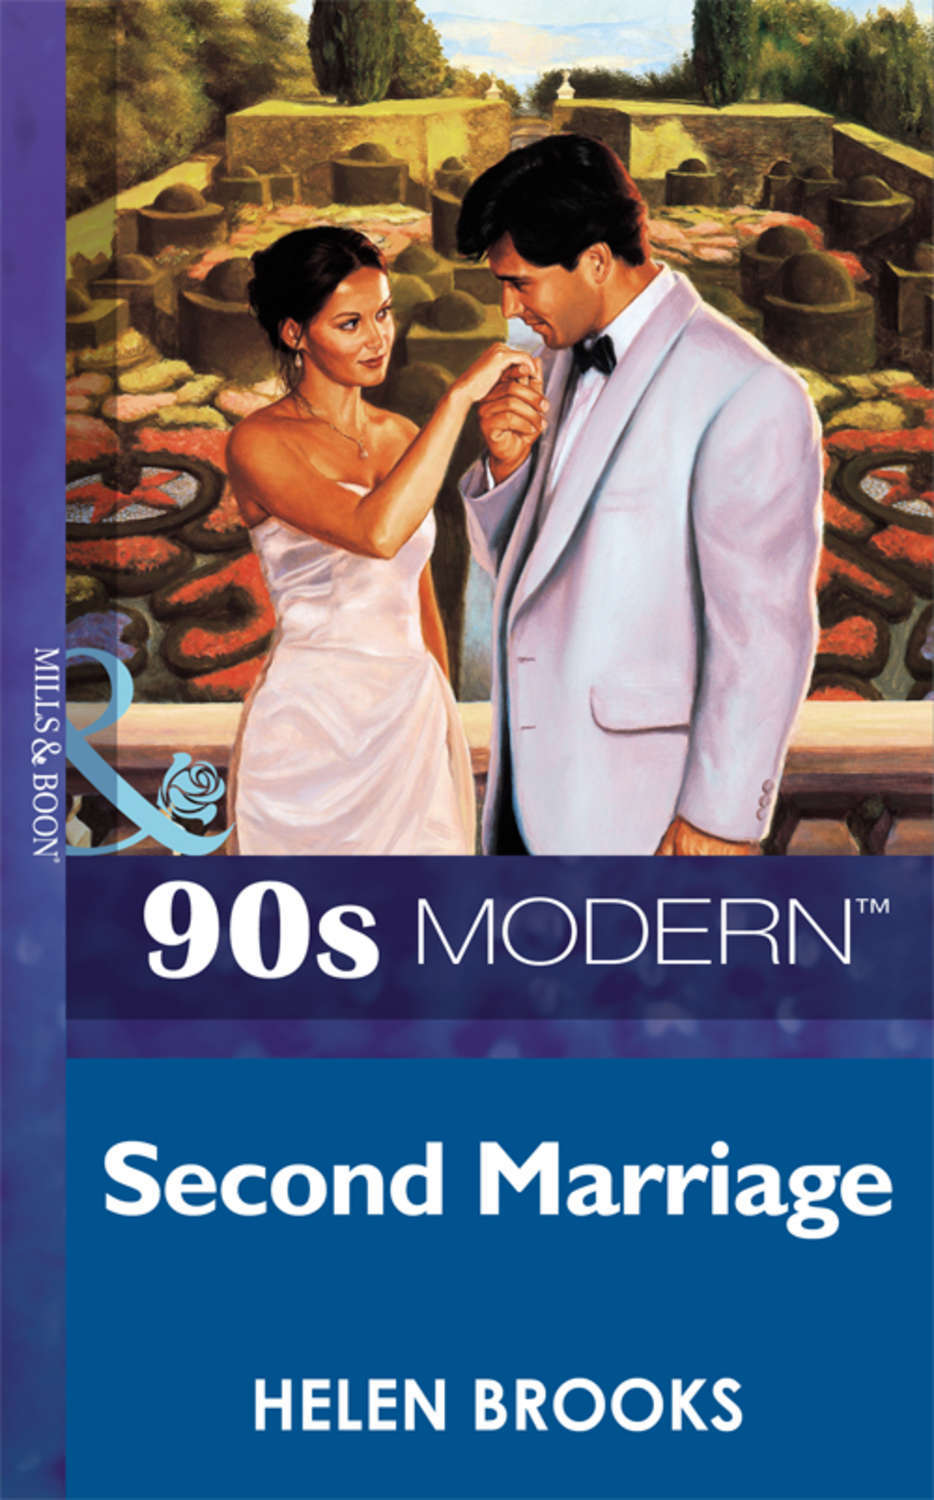 Читать книги про брак. Marriage книга. Брукс Хелен игра. Modern marriage book.